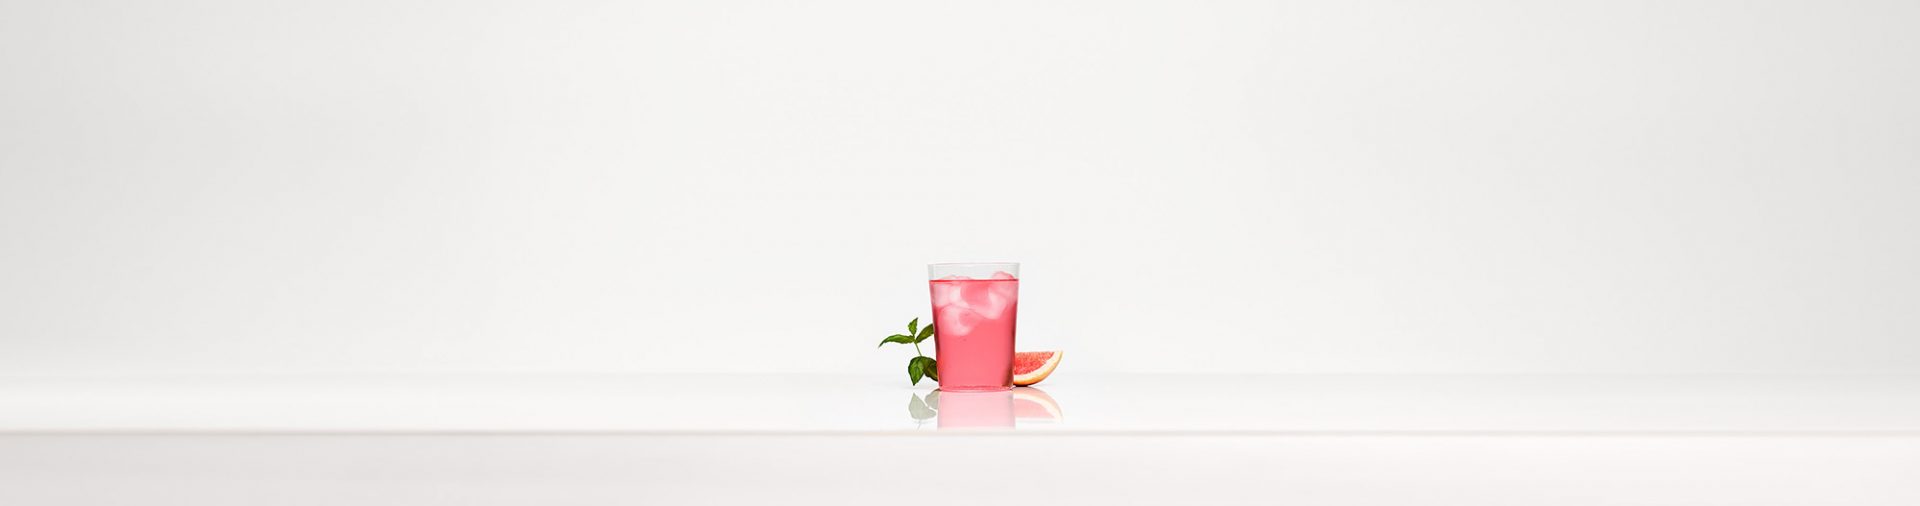 Et glas lyserød sodavand